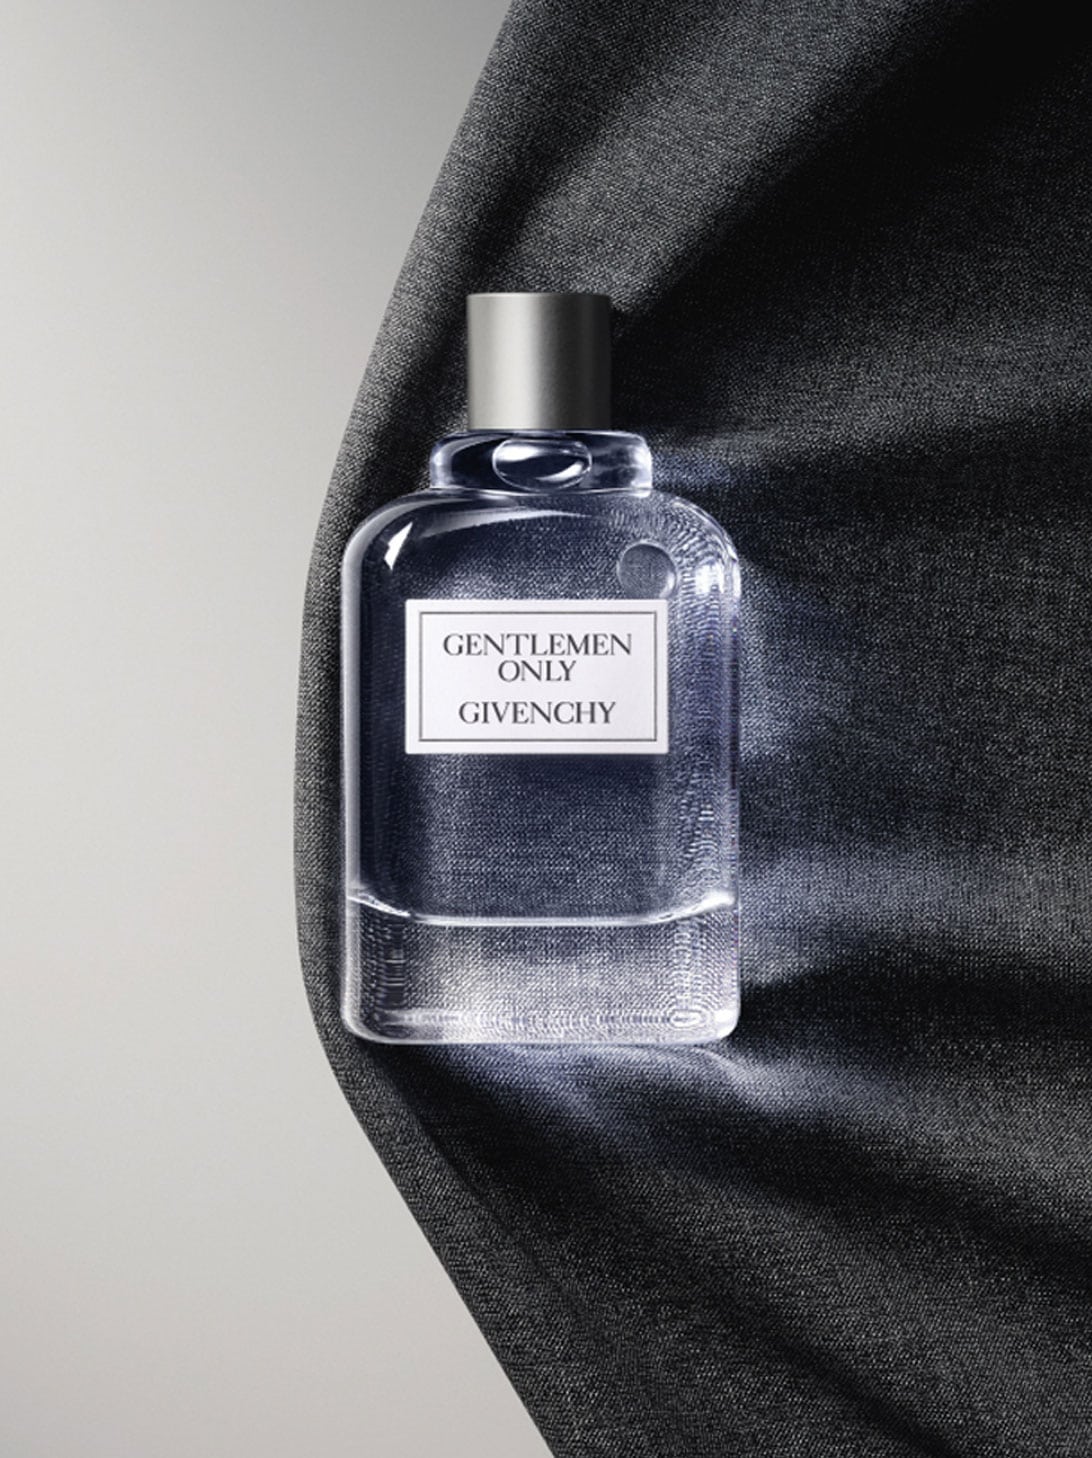 Gentlemen Only Givenchy » Givenchy » The Parfumerie » Sri Lanka